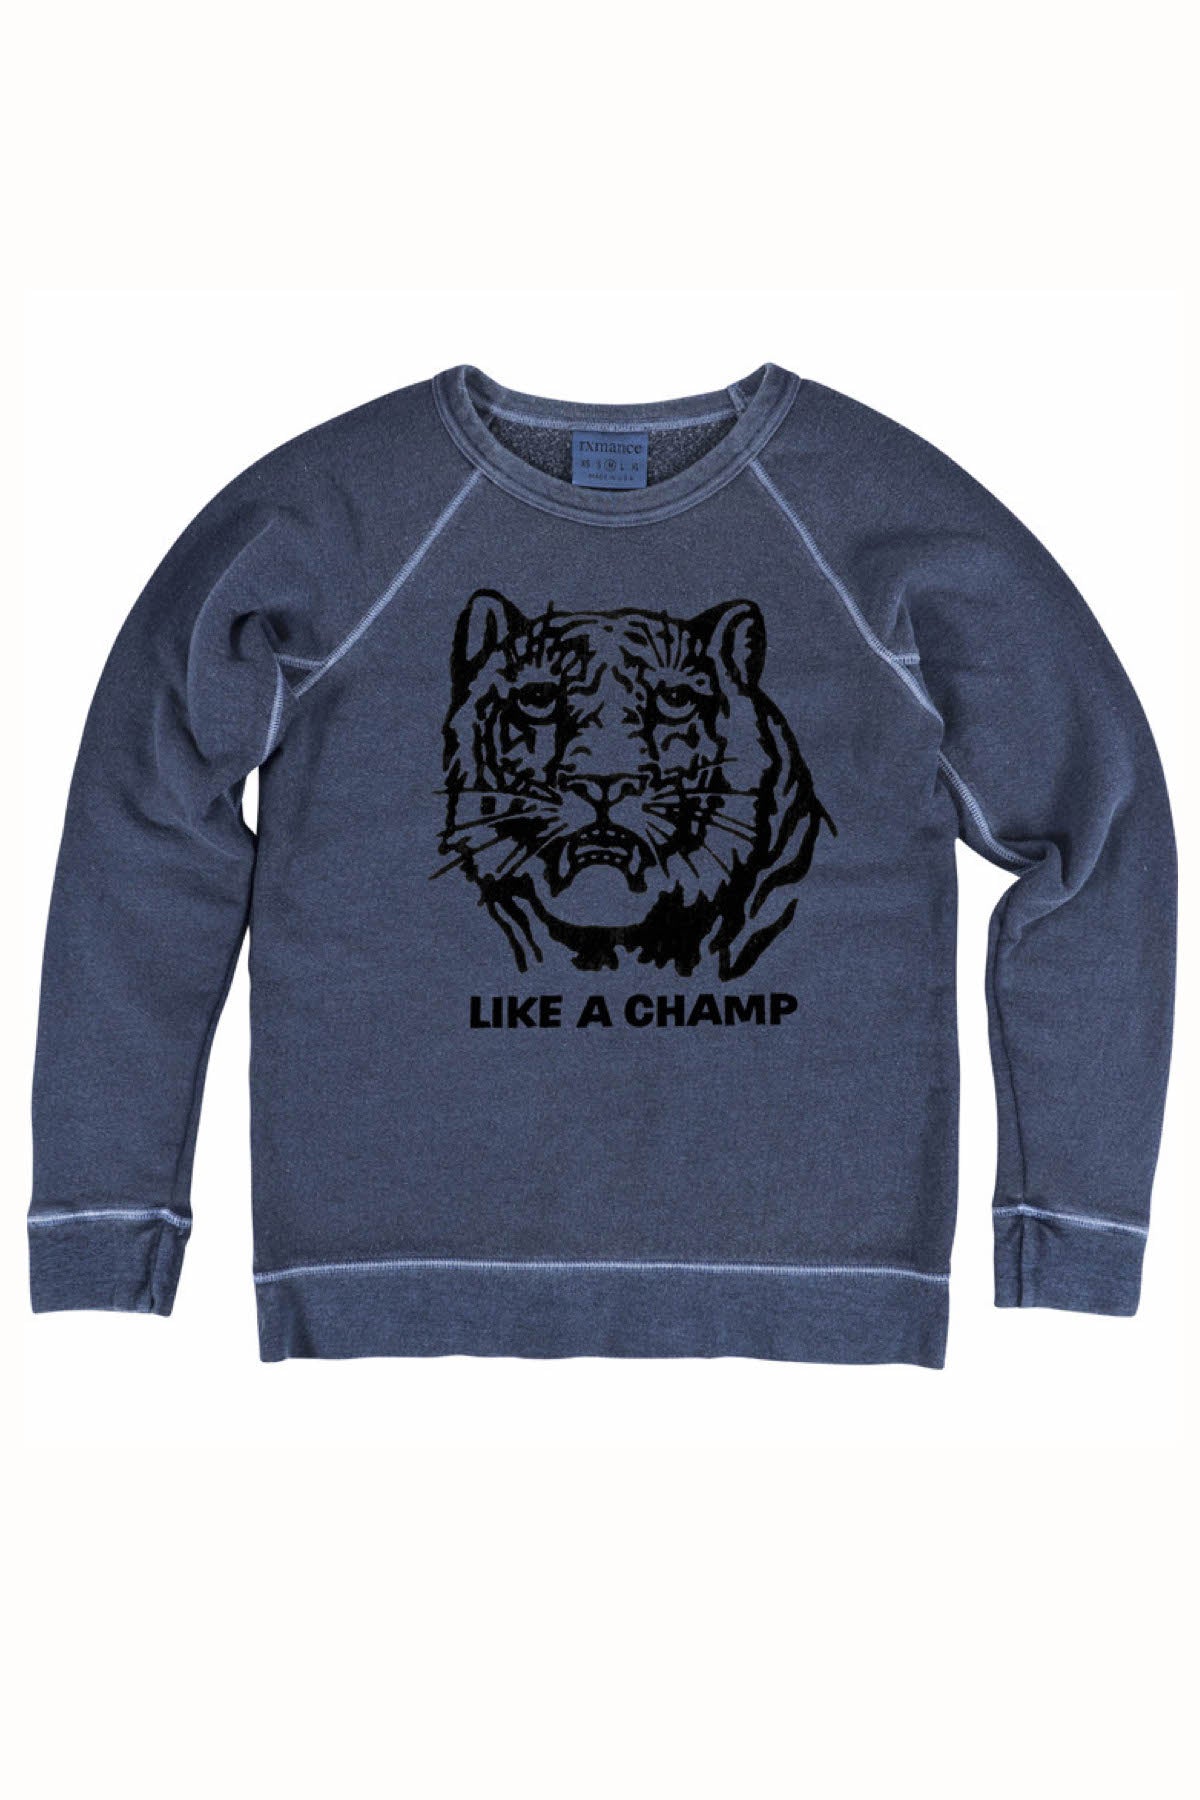 Rxmance Unisex Navy Blue Like A Champ Sweatshirt